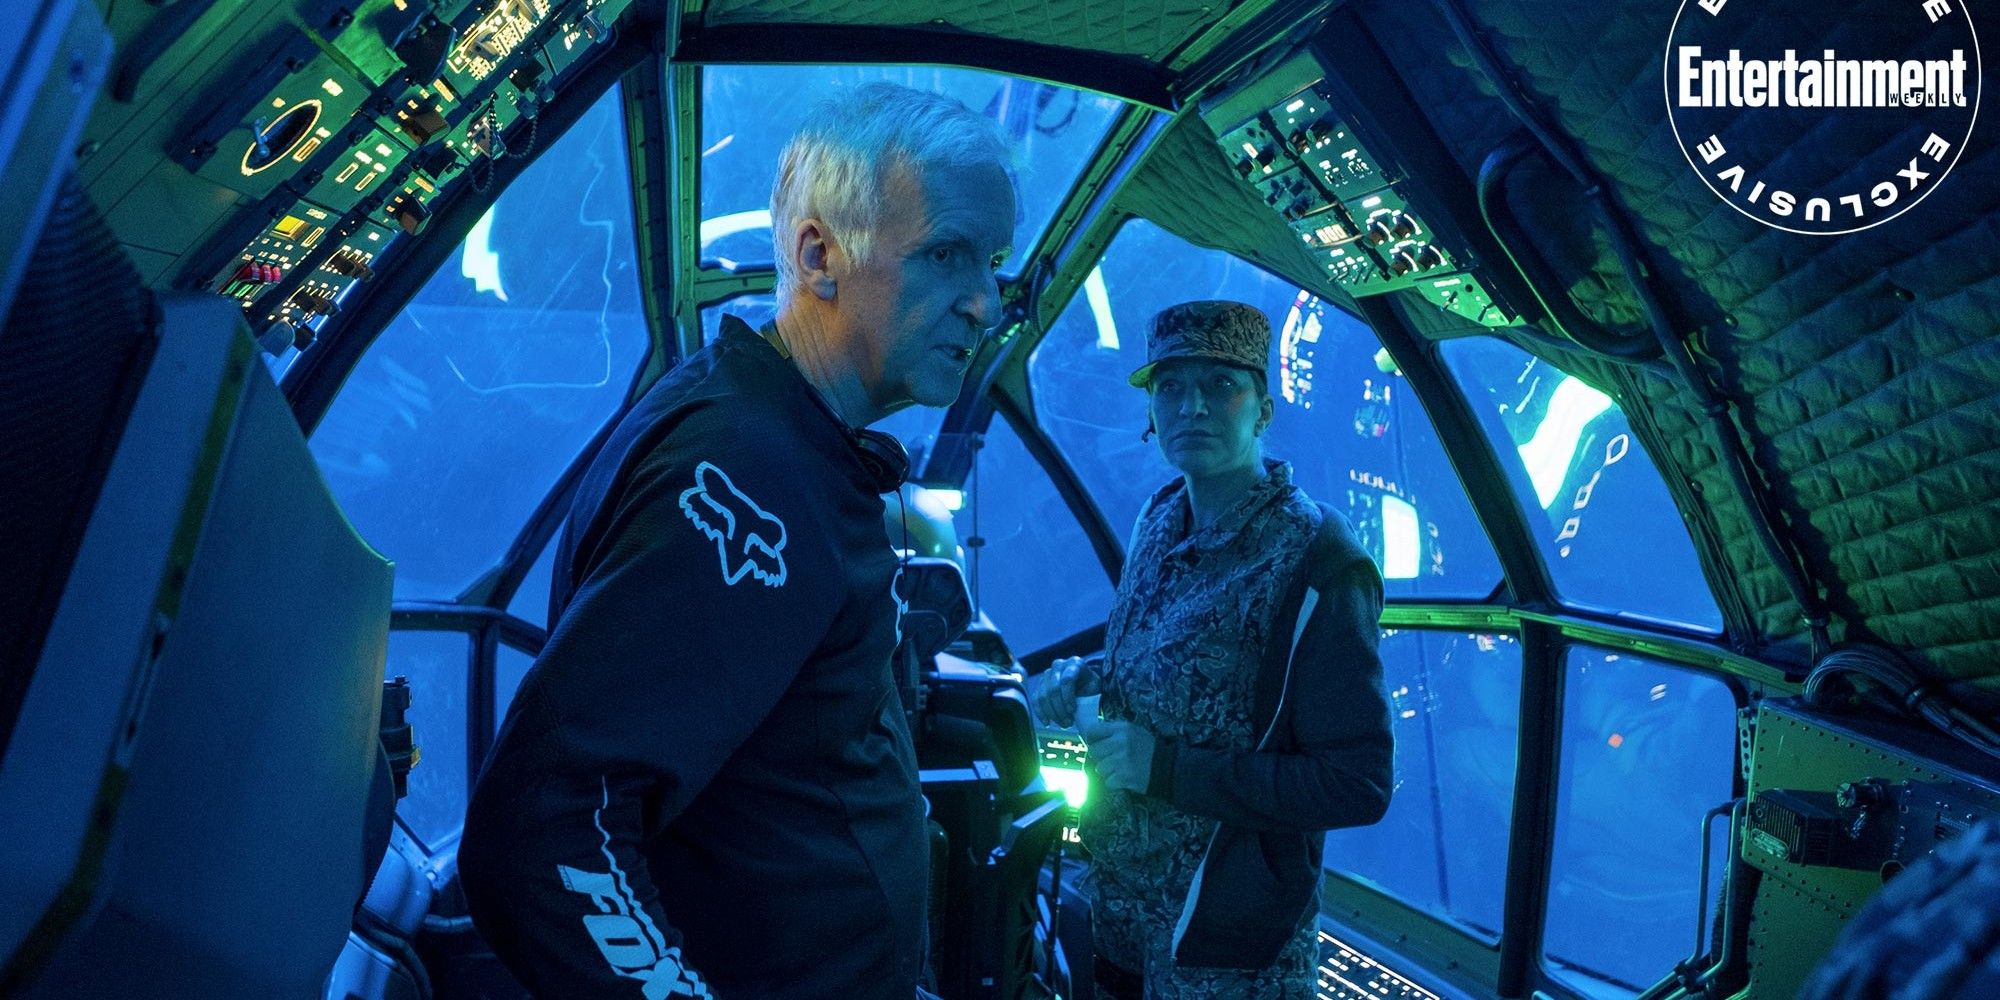 Avatar 2 Set Photo Shows Inside Human Military Aircraft